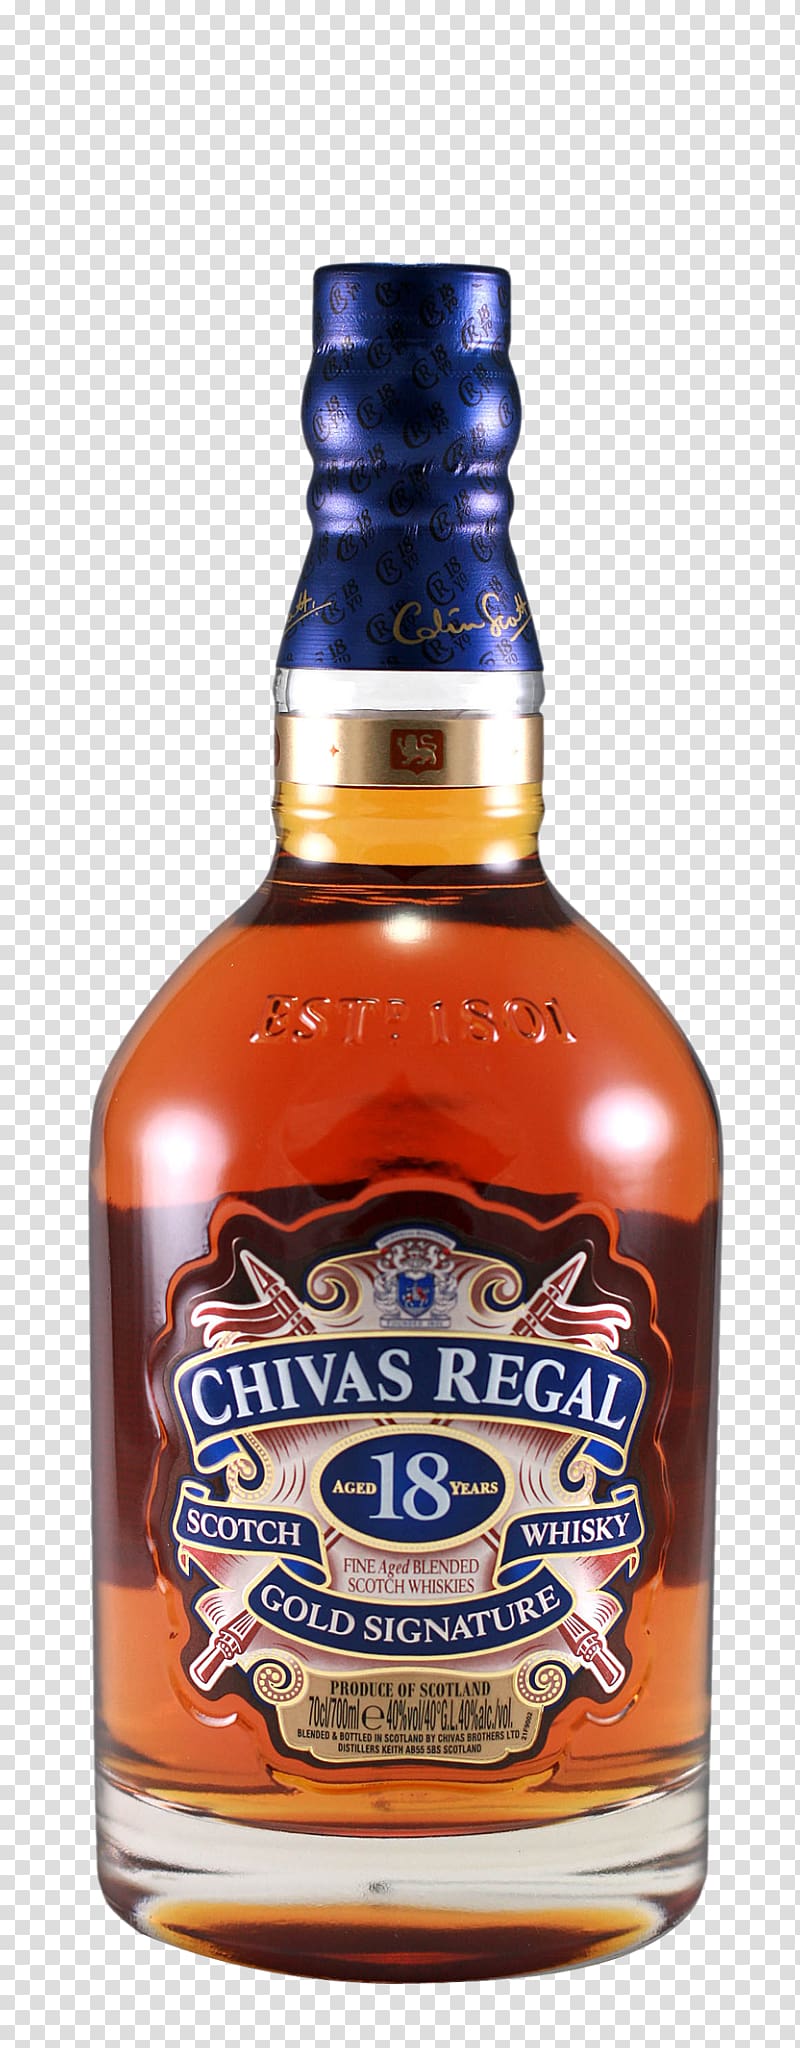 Chivas Regal Scotch whisky Blended whiskey Single malt whisky, Chivas logo transparent background PNG clipart